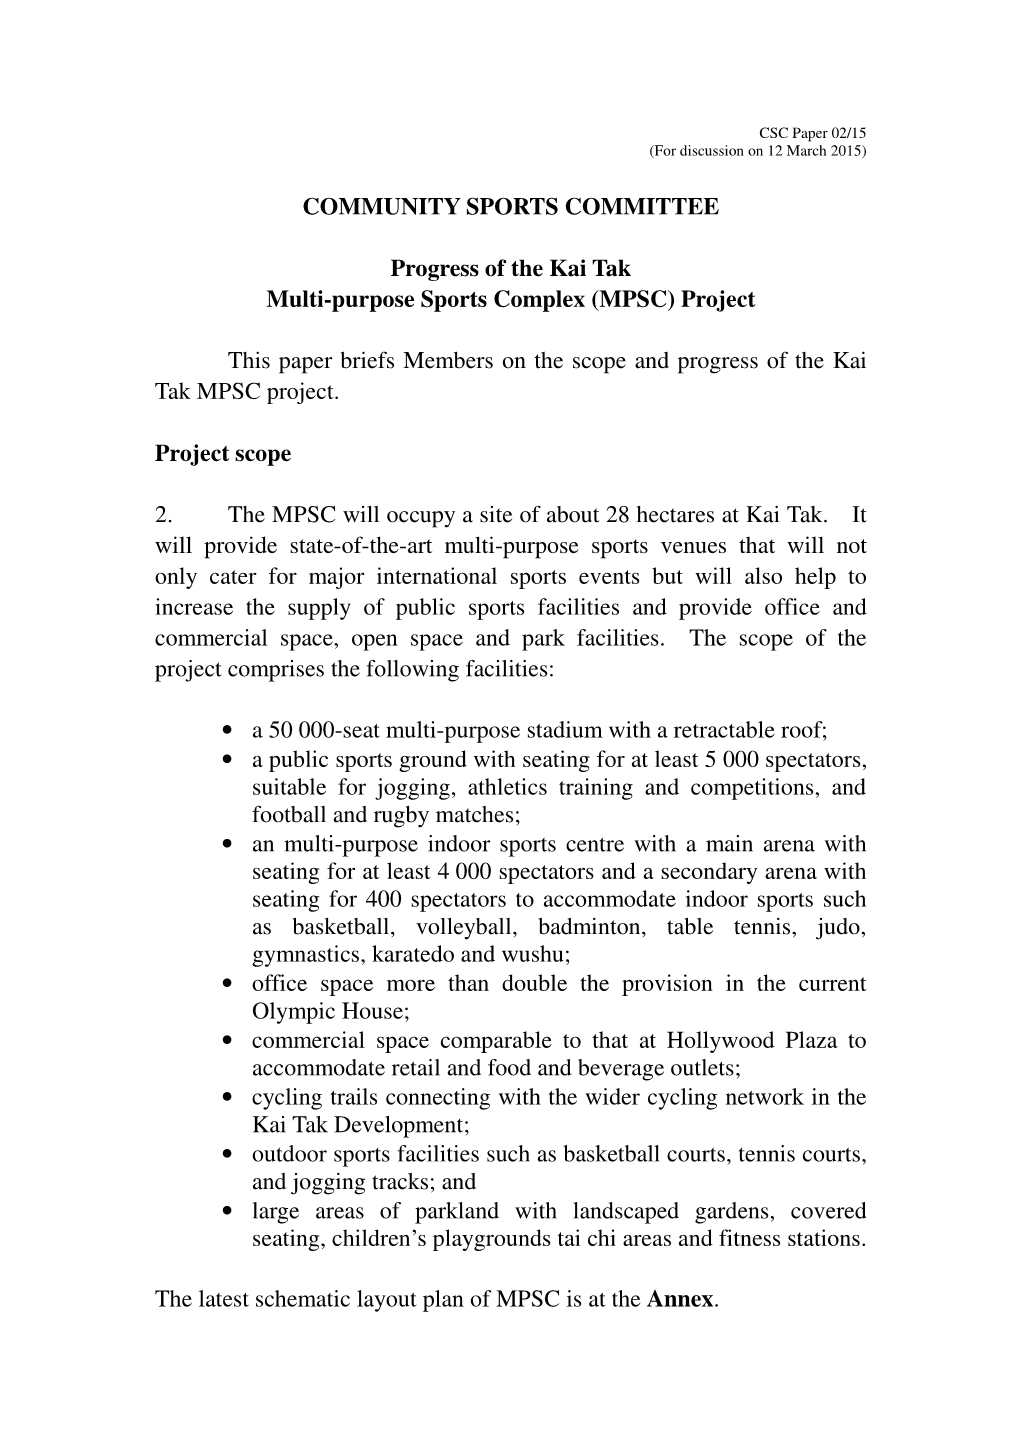 Progress of the Kai Tak Multi-Purpose Sports Complex (MPSC) Project